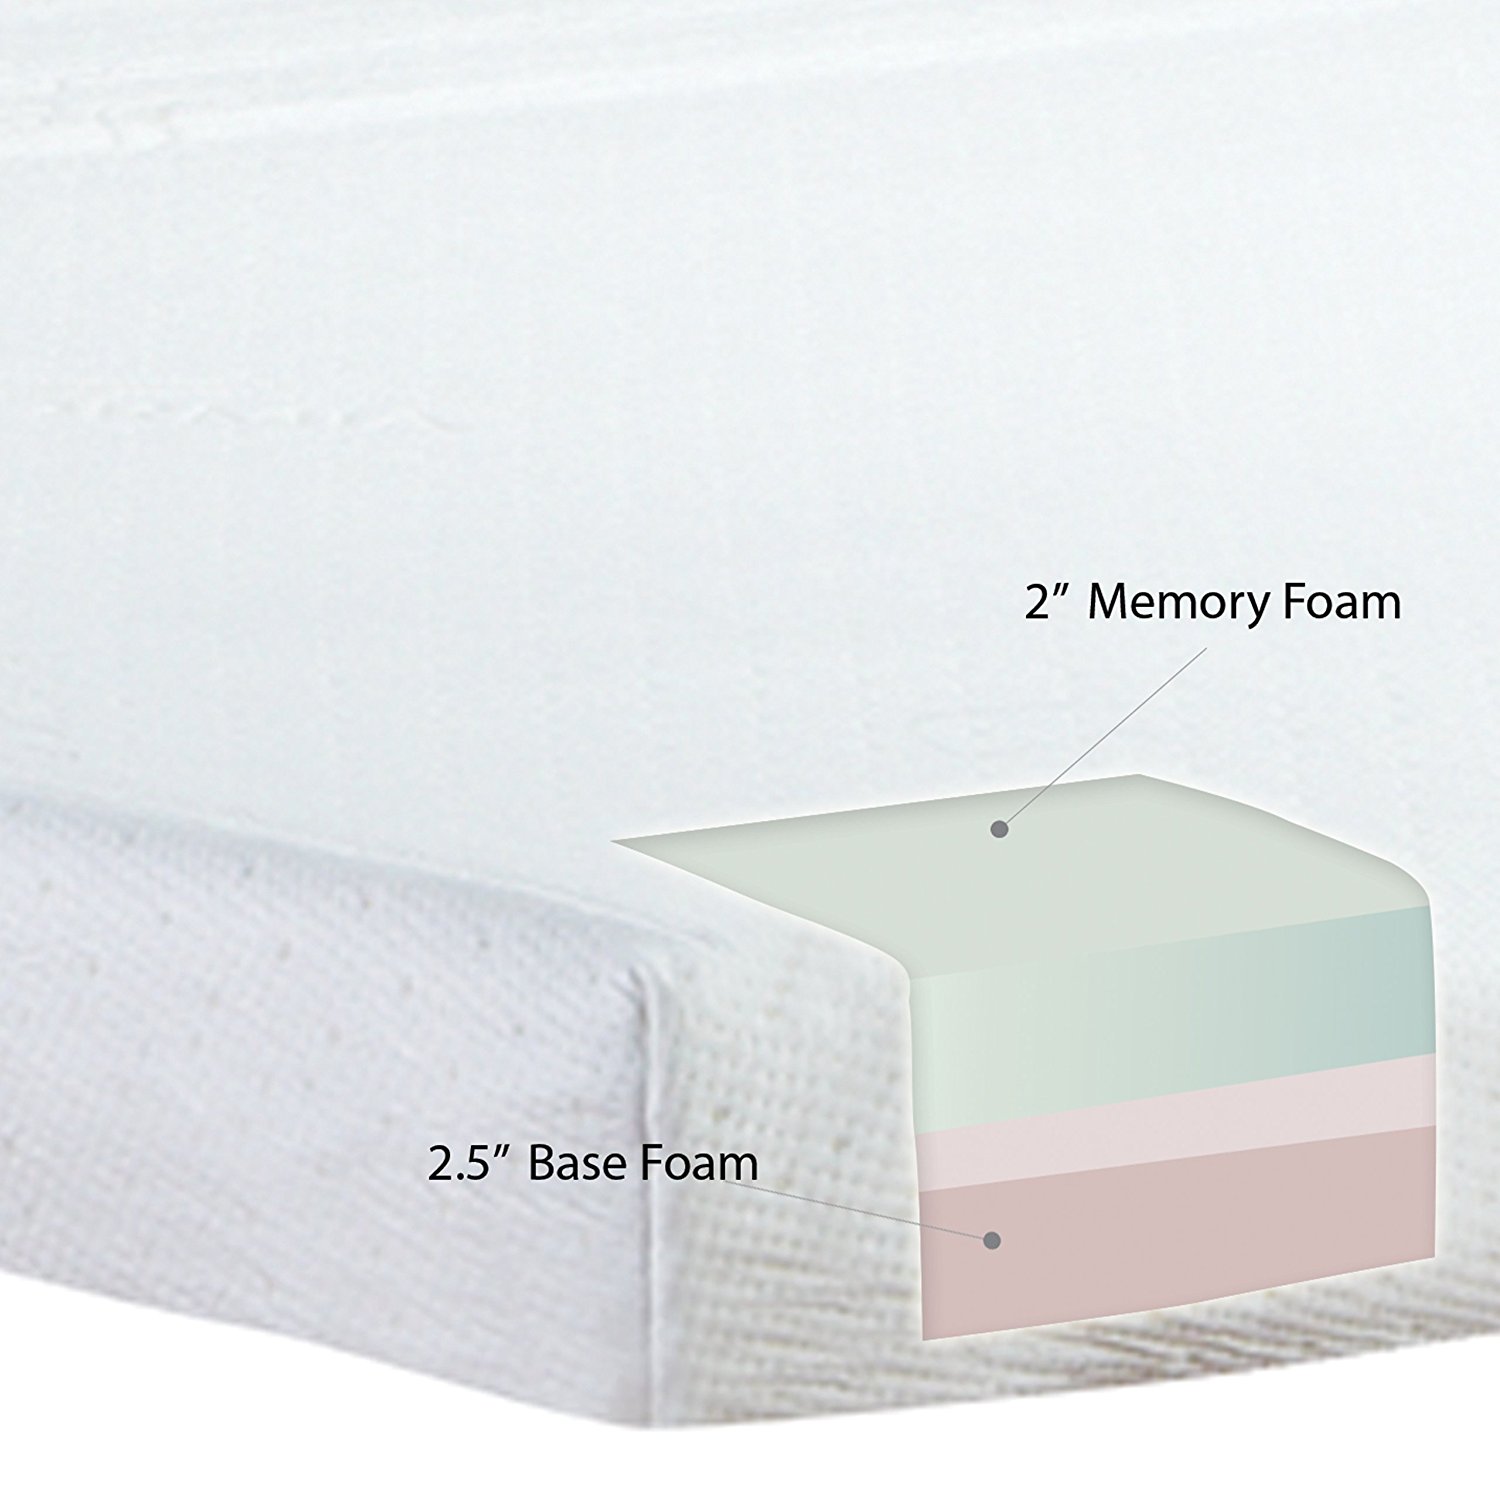 Classic Brands Memory Foam Sofa Mattress | Replacement Mattress for Sofa Bed Sleeper, Full Size